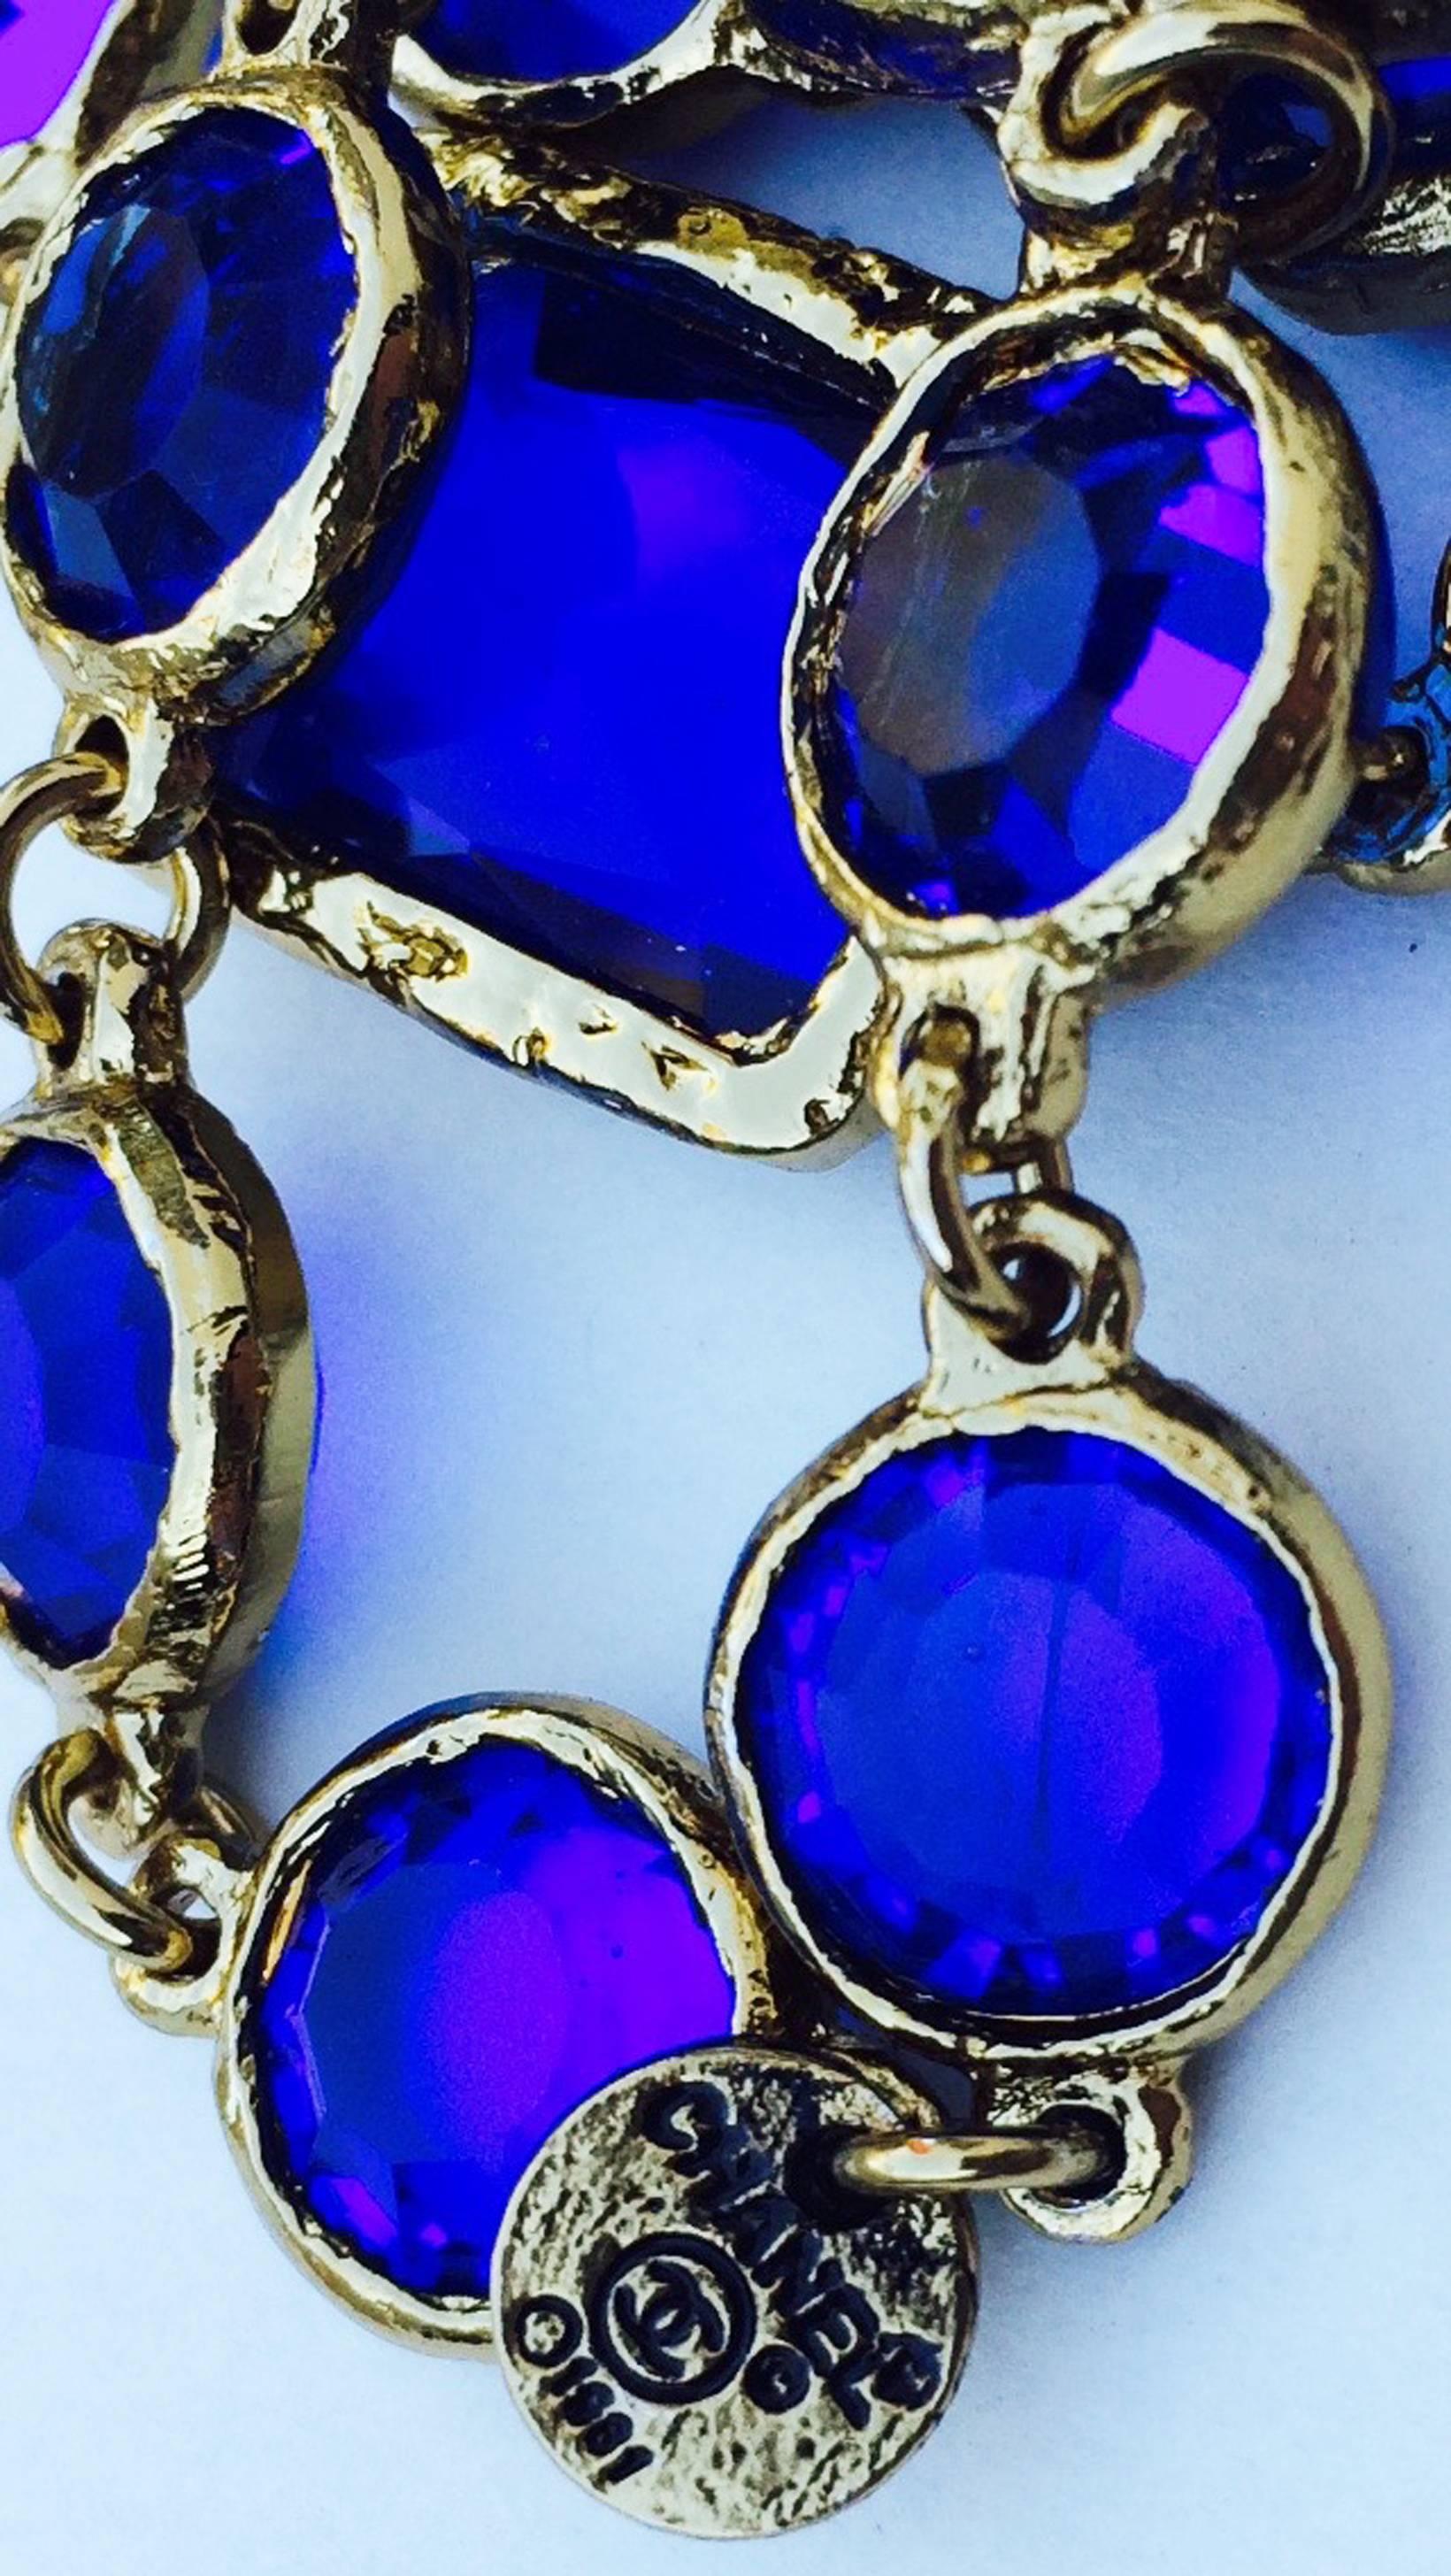 A fine vintage Chanel blue crystal sautoir necklace. Authentic signed gilt metal link item features both 